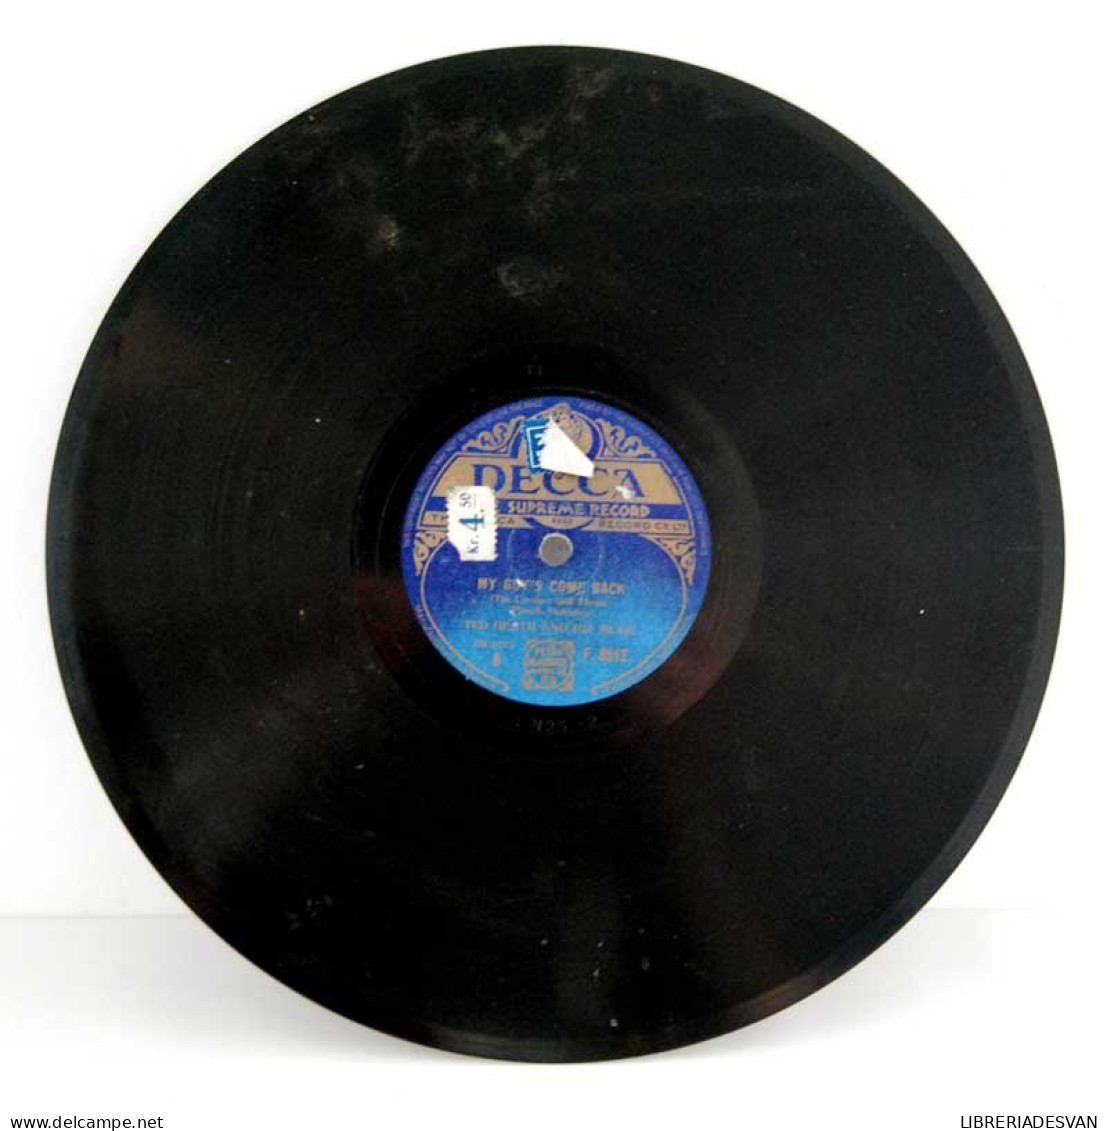 Ted Heath - Opus 1 / My Guys Come Back. Disco De Pizarra F.8512 - 78 Rpm - Gramophone Records